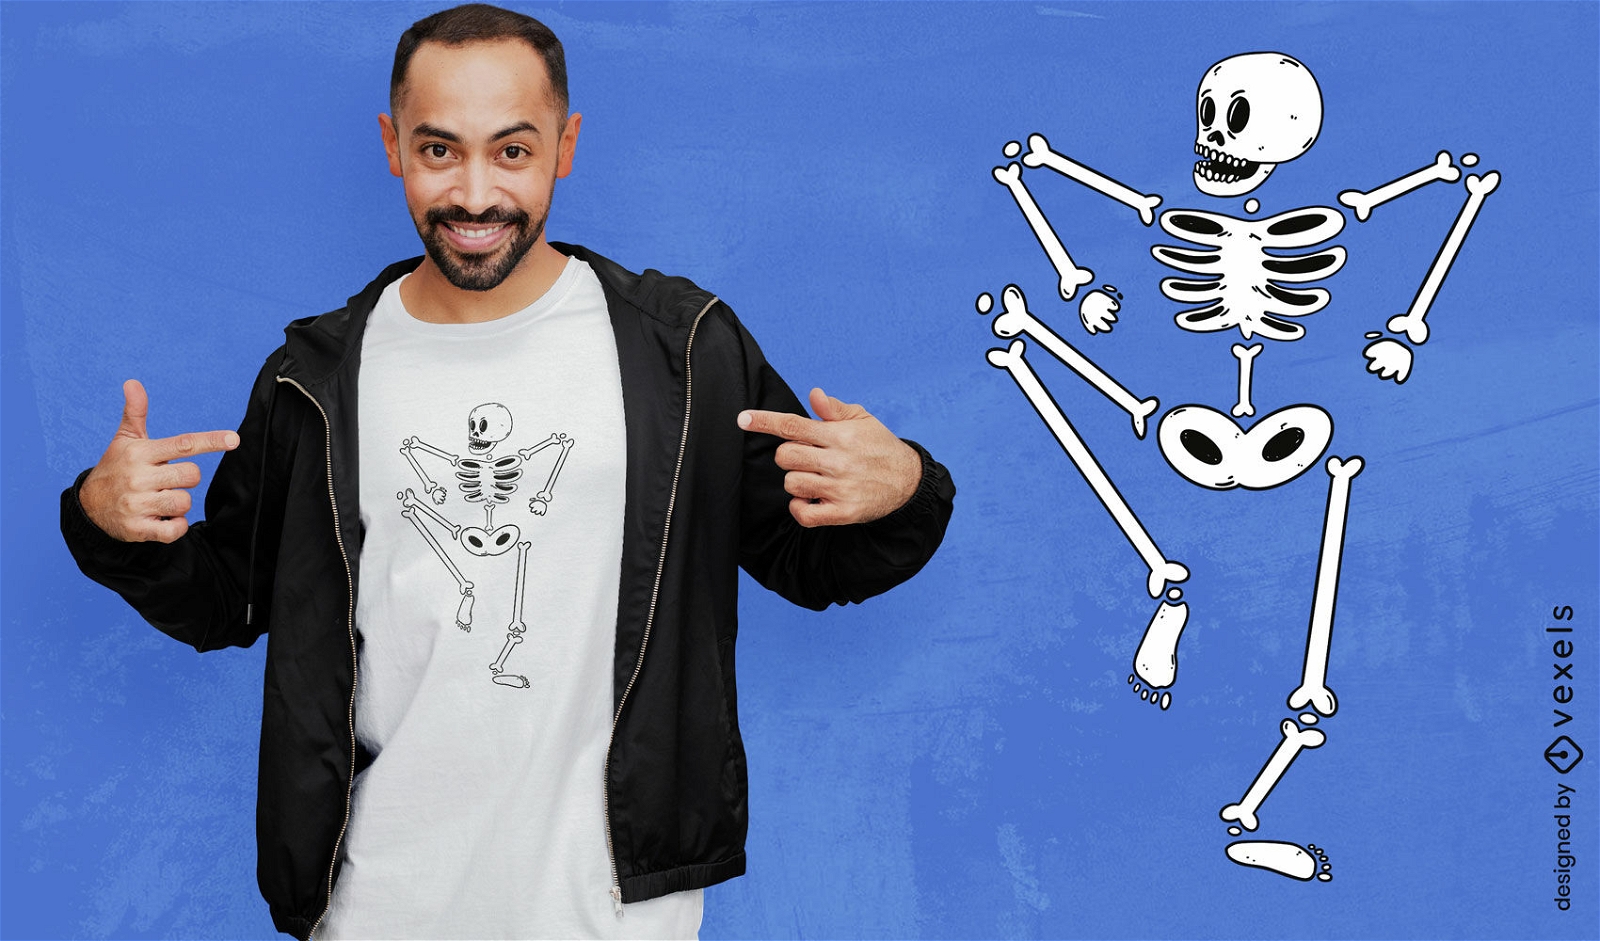 Diseño de camiseta de esqueleto humano bailando.